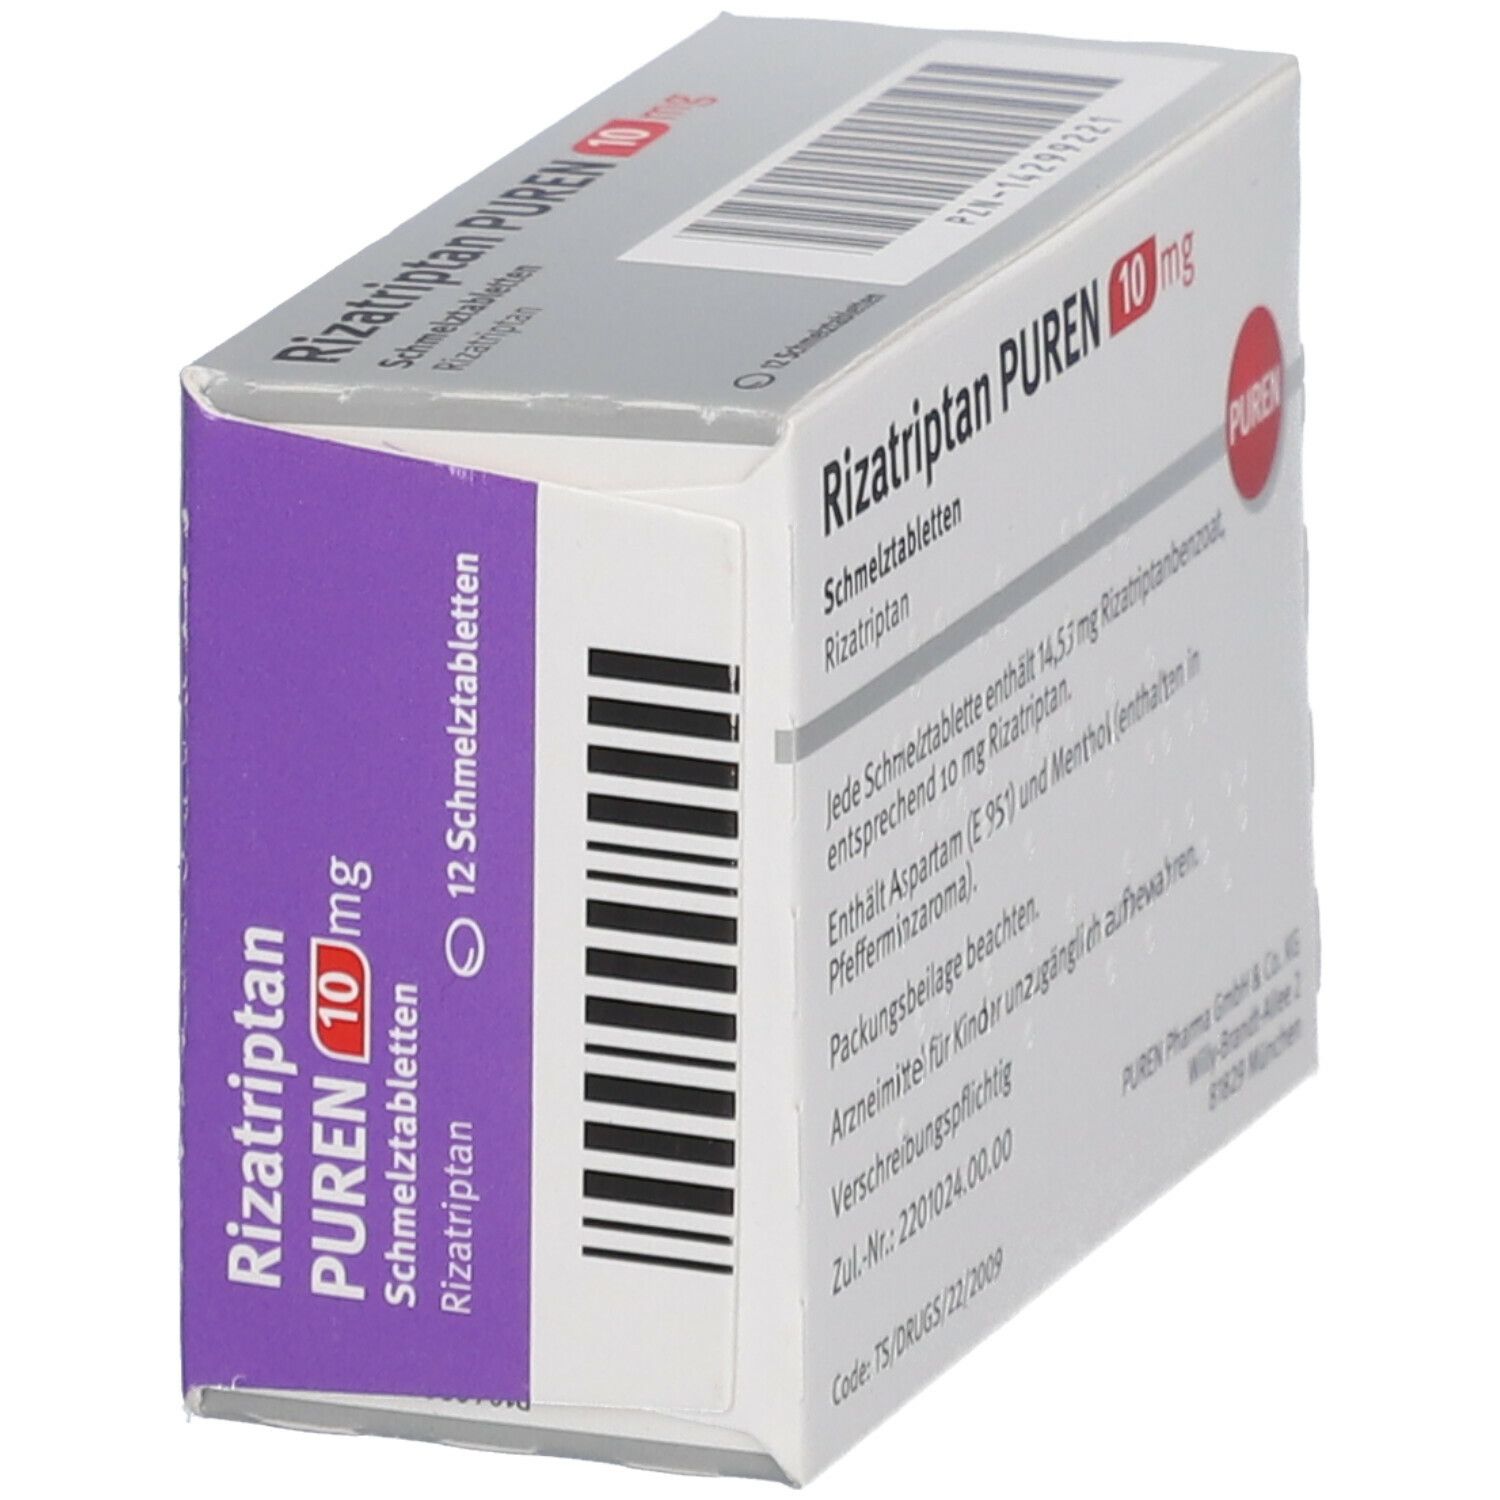 RIZATRIPTAN PUREN 10 mg Schmelztabletten